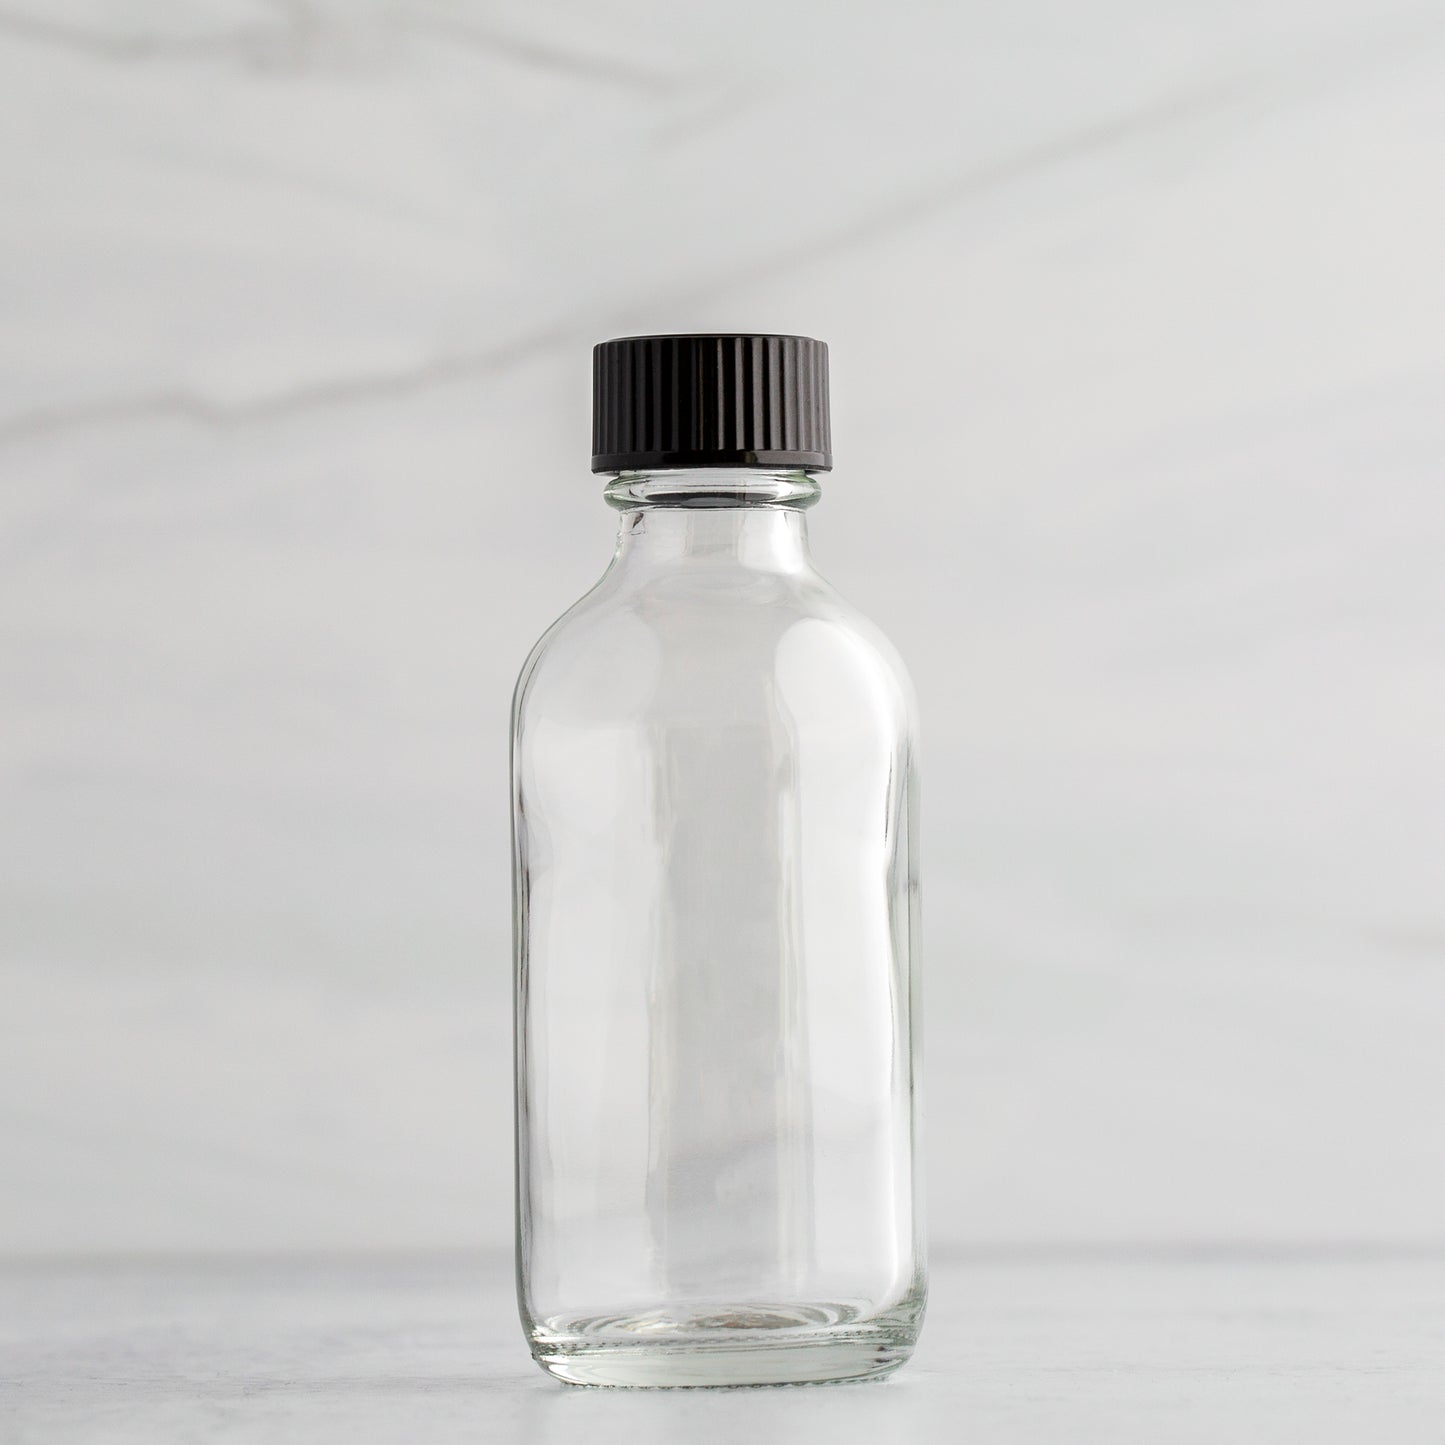 2 oz Clear Glass Bottle with Black Phenolic Cap